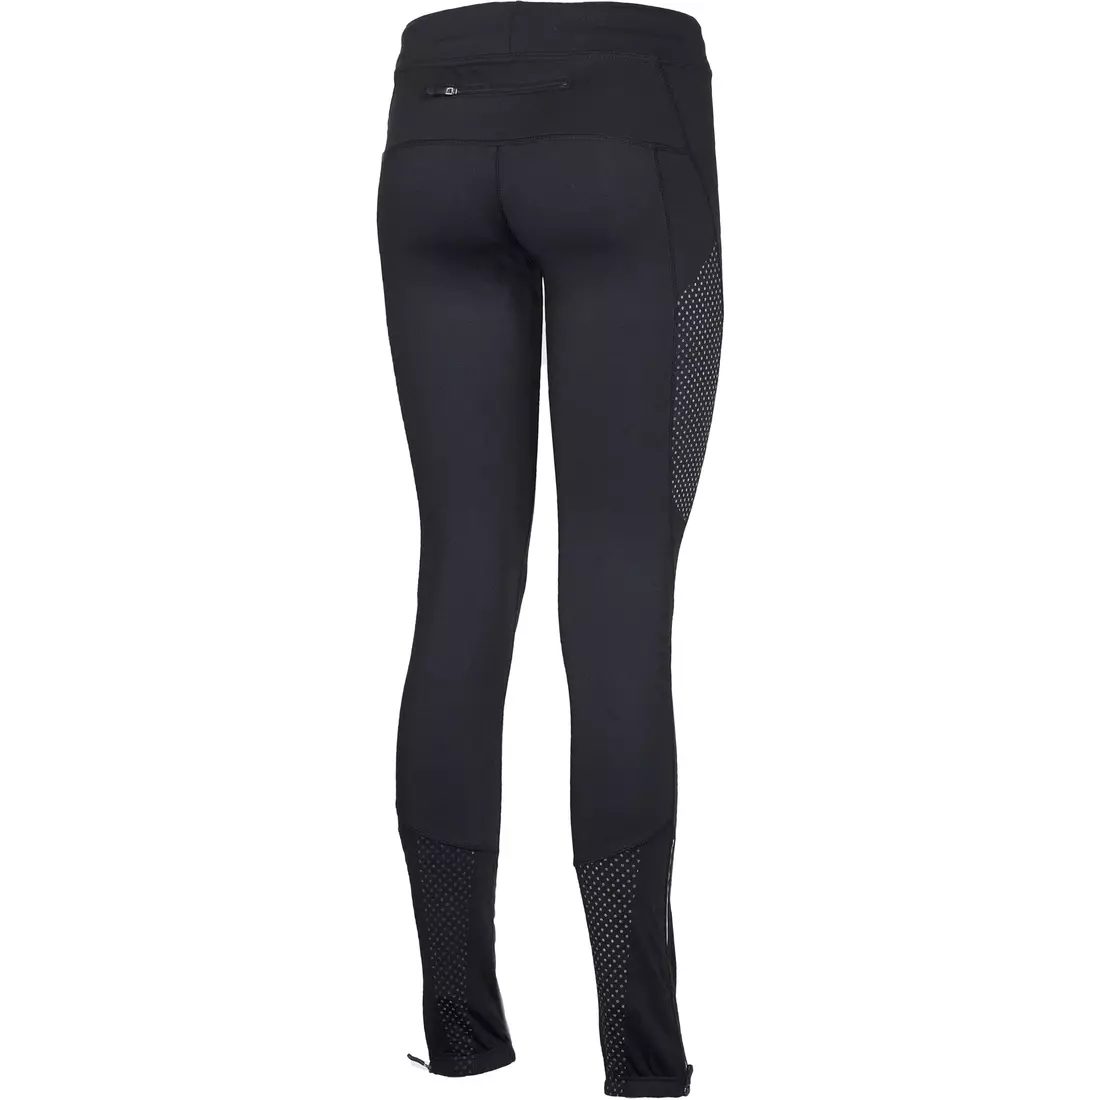 ROGELLI ANTEA 801.003 women's insulated running pants, black